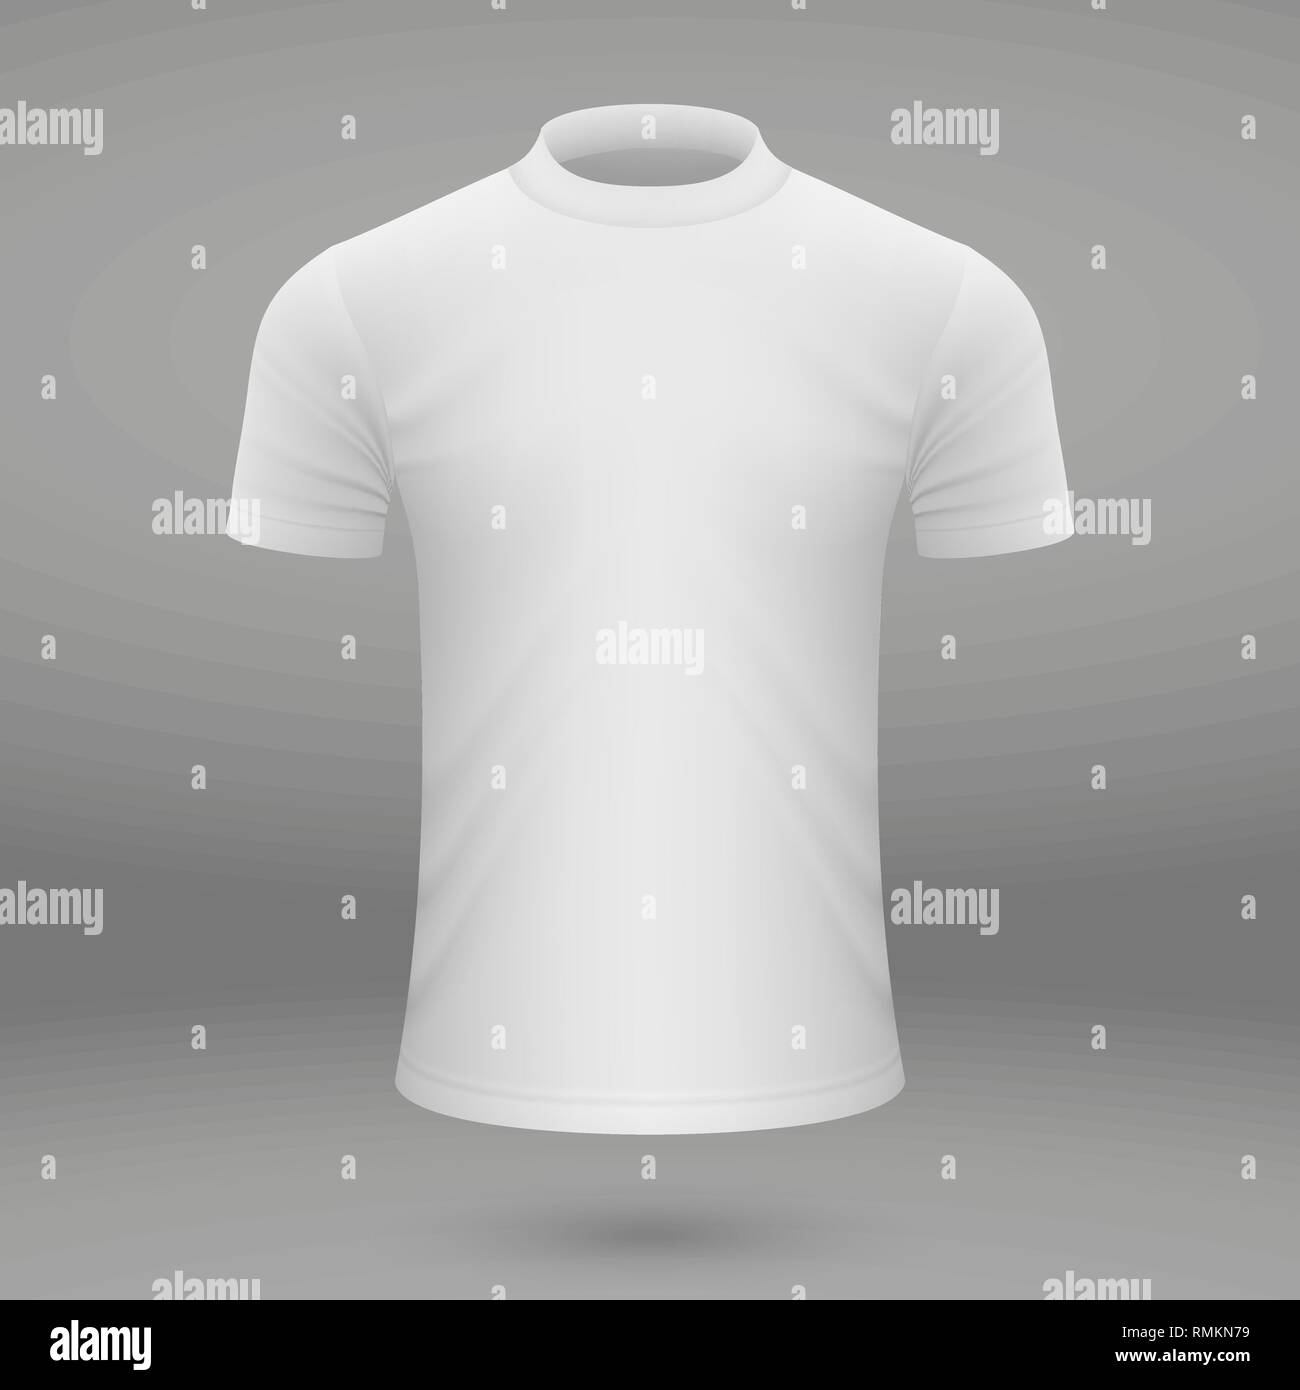 shirt template for soccer jersey. Vector illustration Stock Vector ...